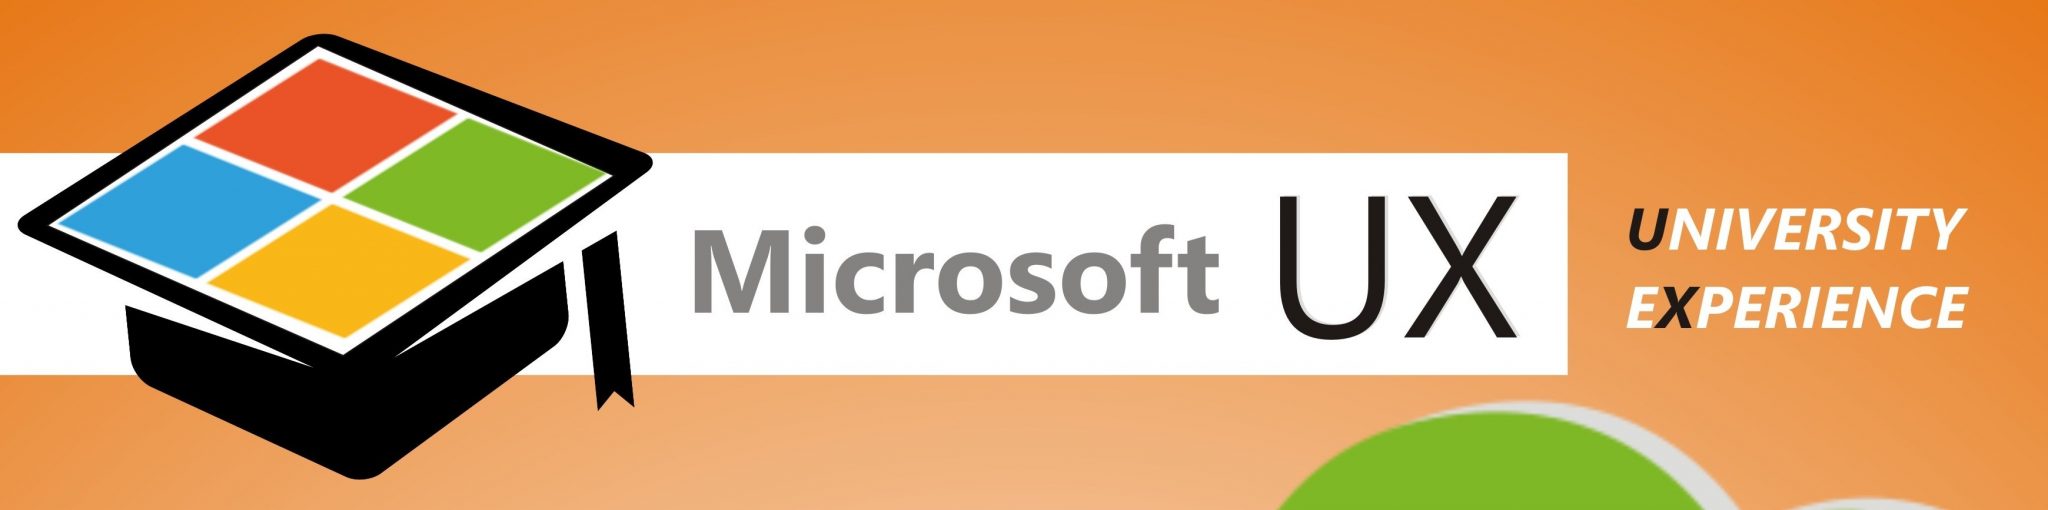 [Event] Microsoft University Experience